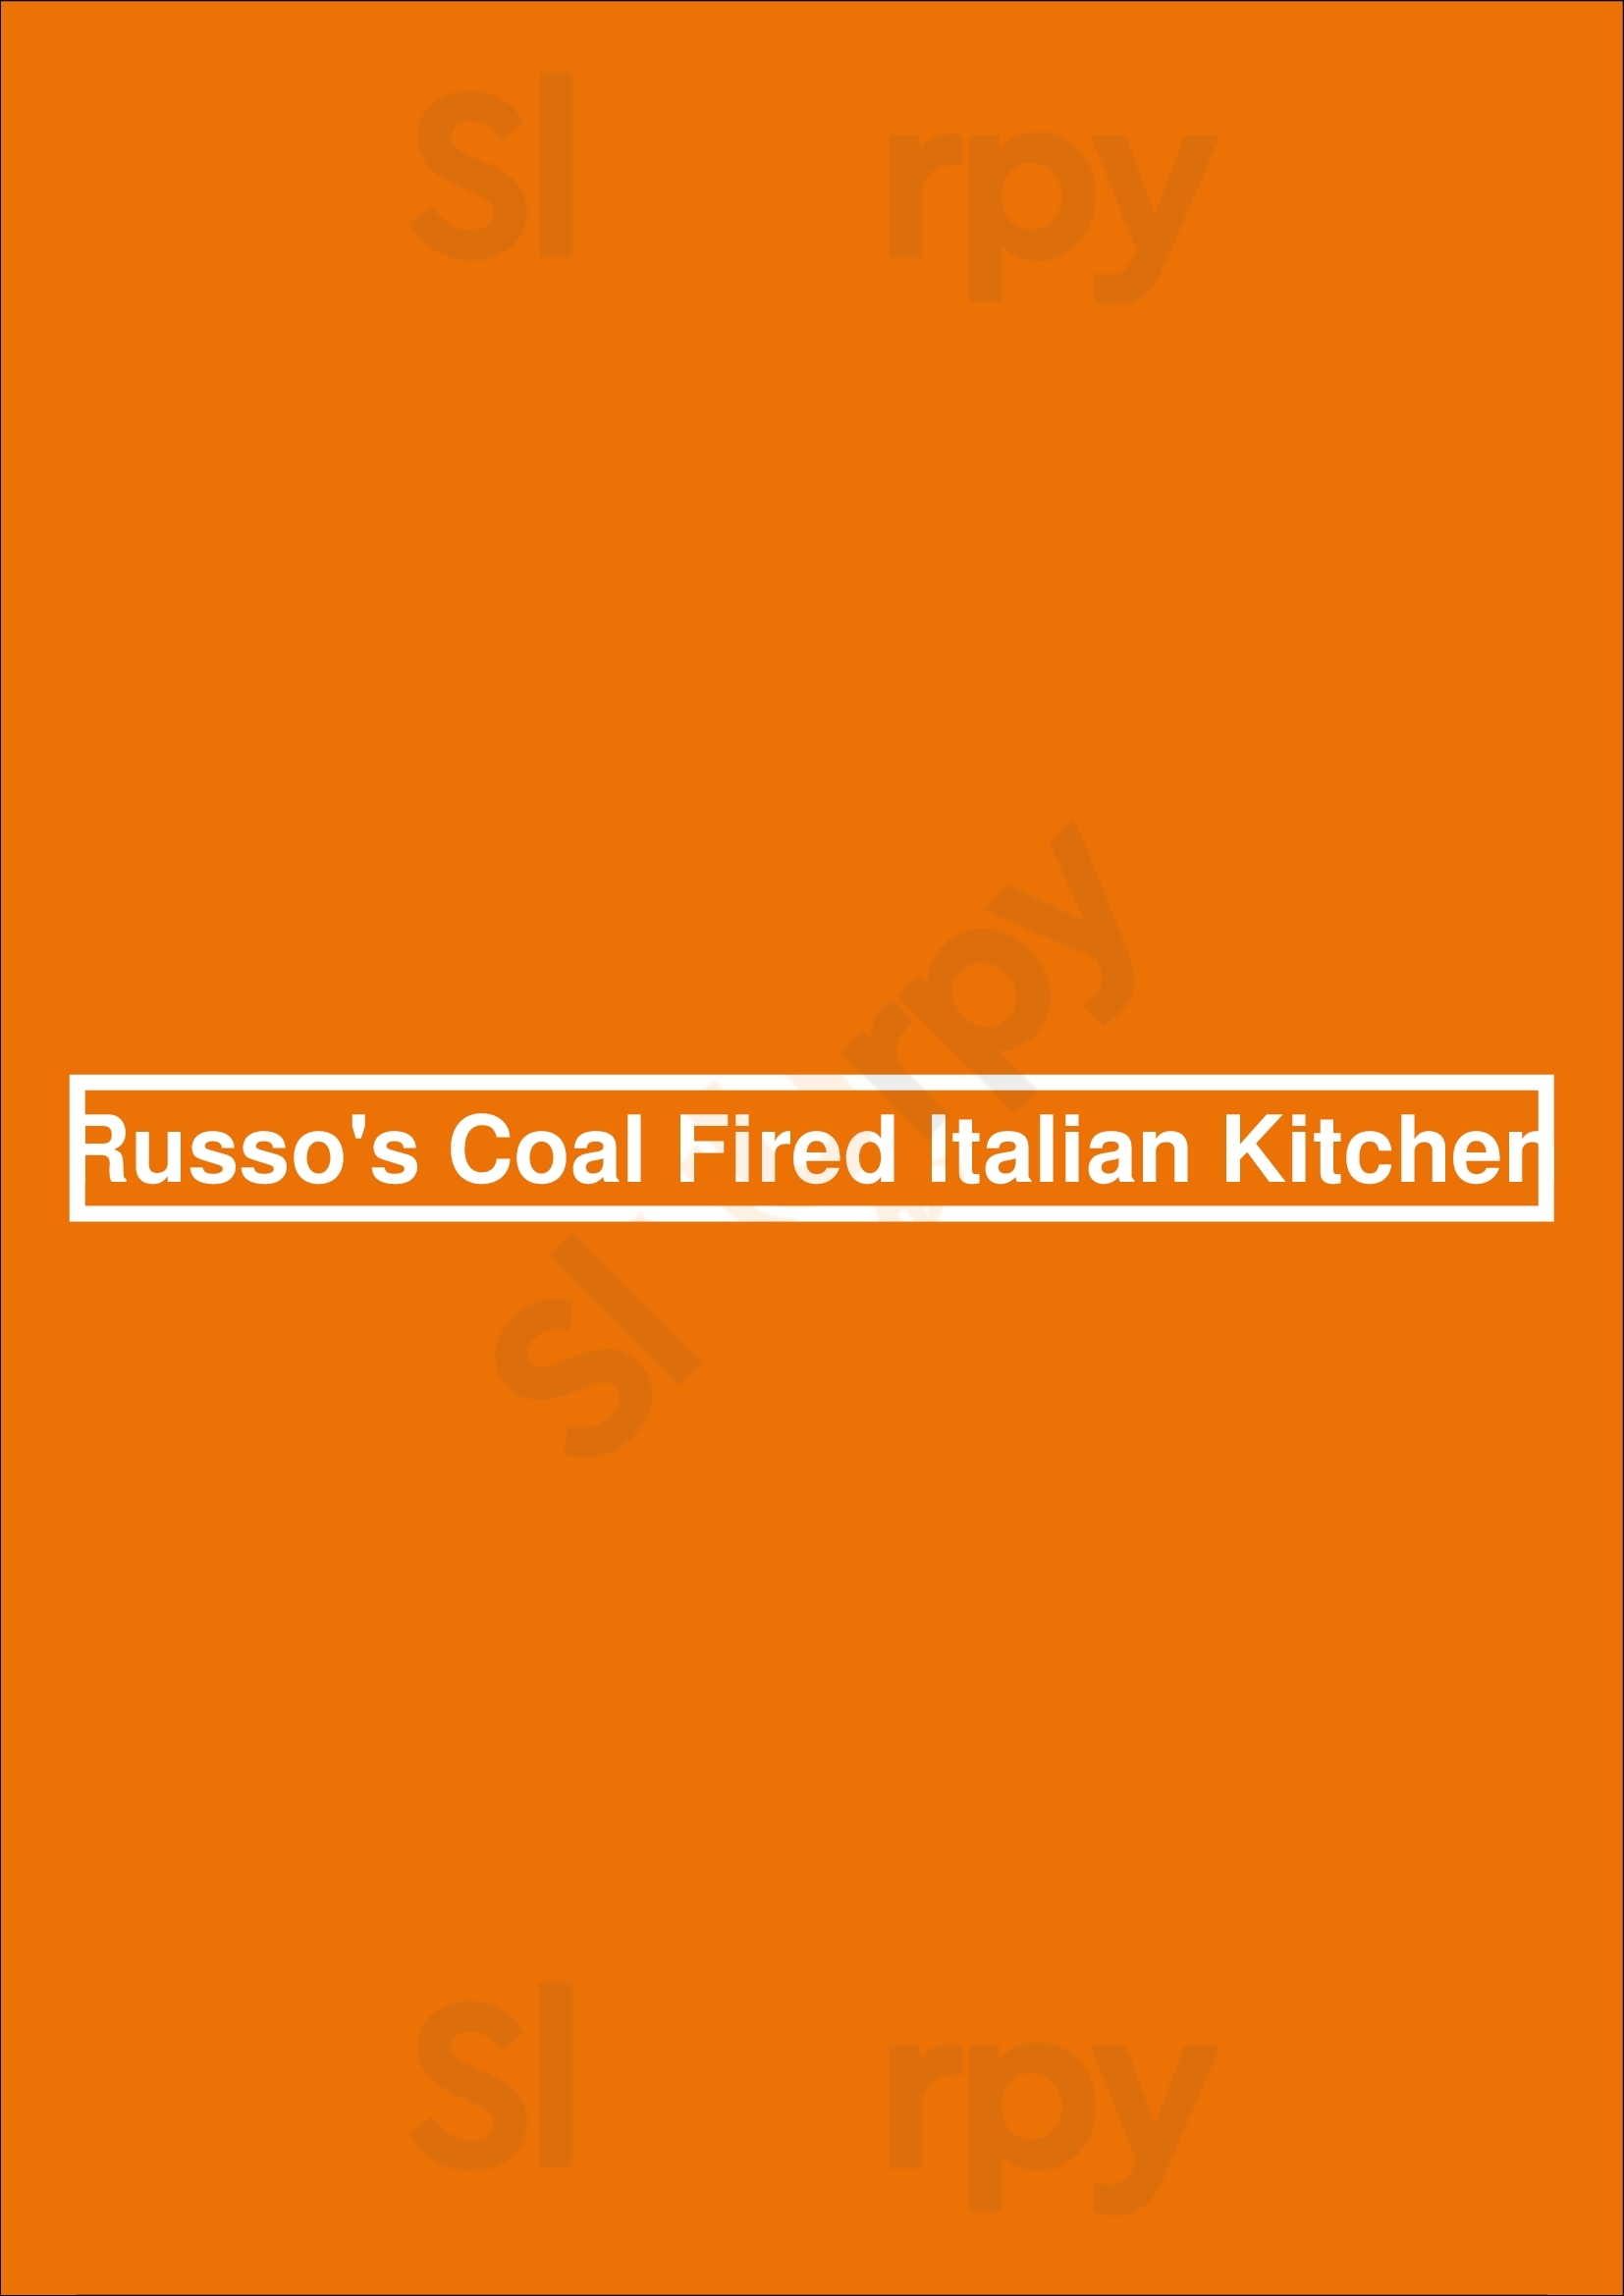 Russo's Coal Fired Italian Kitchen Tulsa Menu - 1